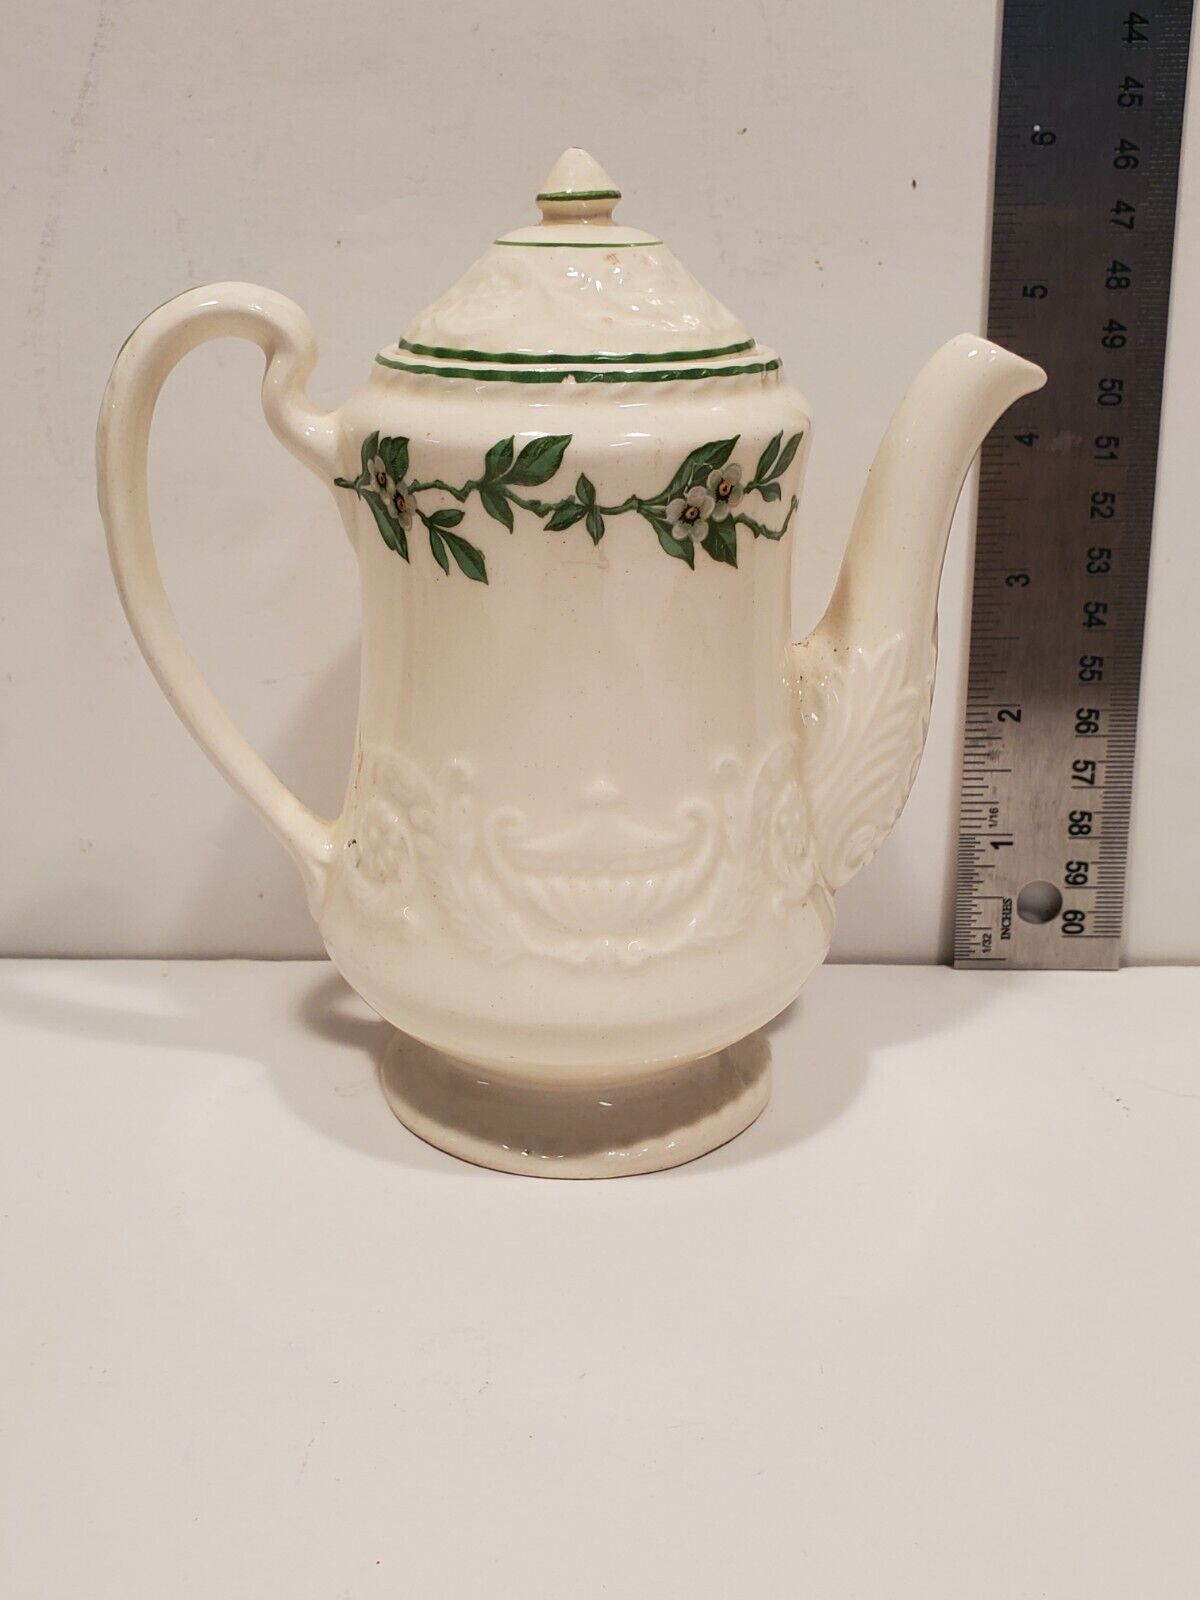 Steubenville orange blossom teapot tea pot